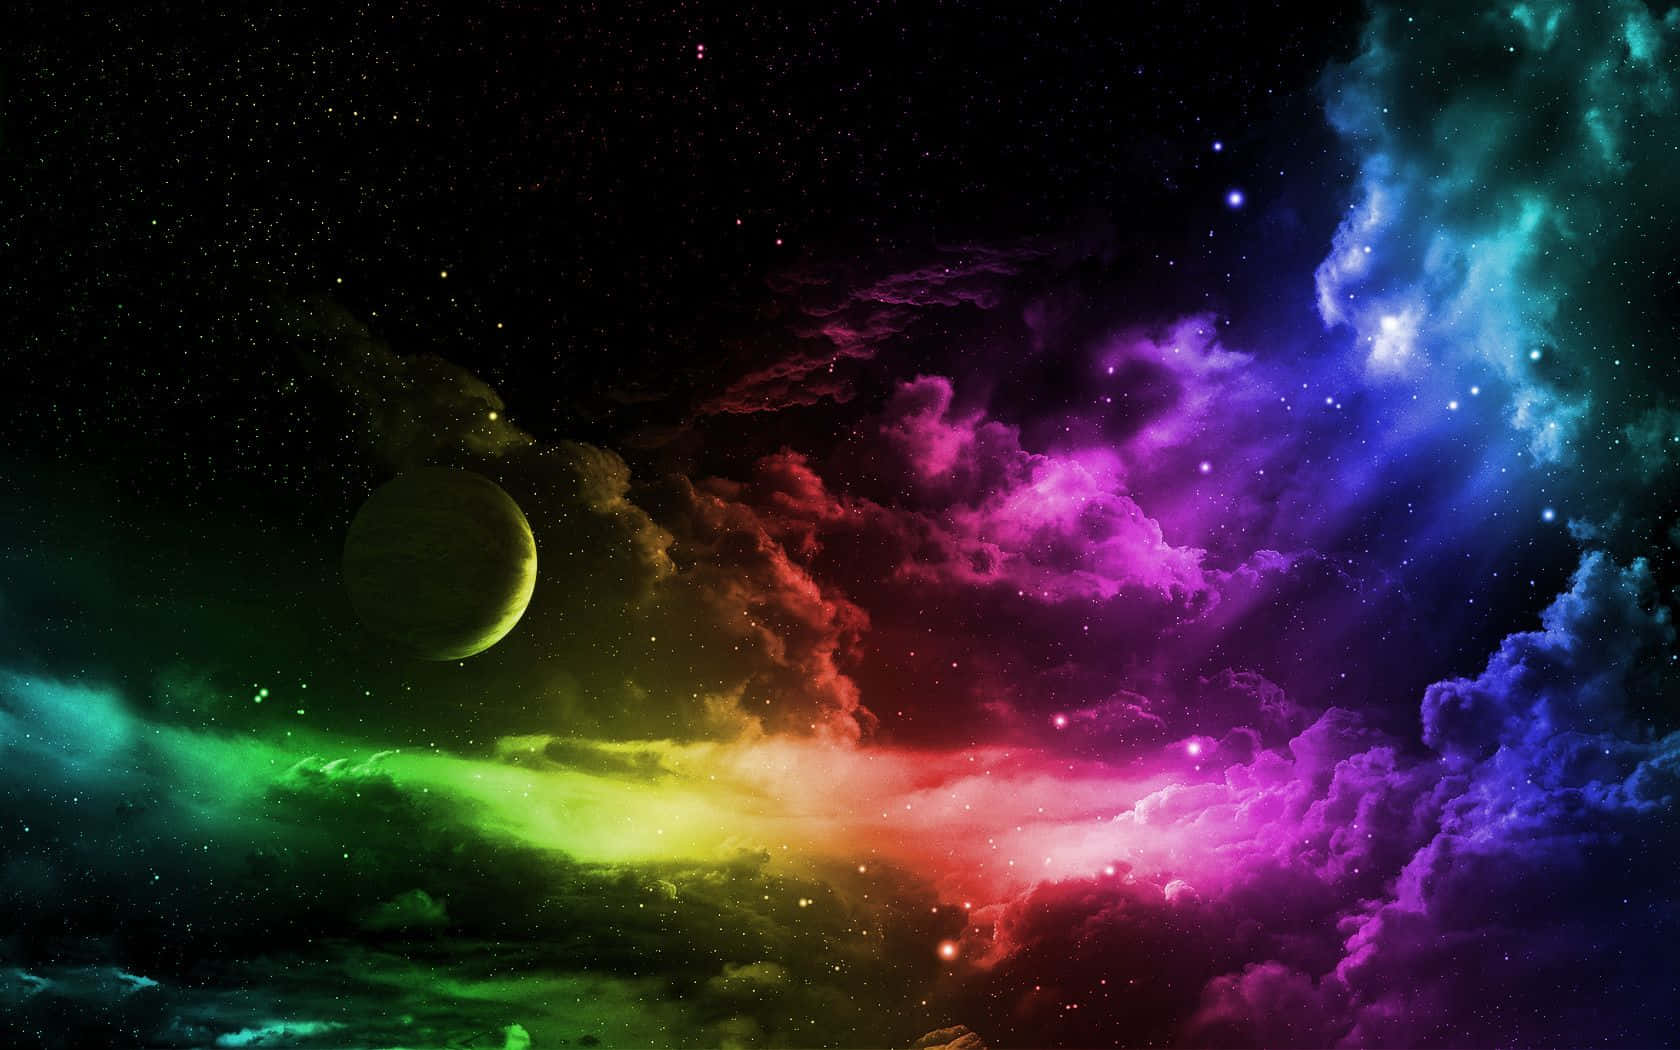 Cute Rainbow Cheetah Digital Art by Random Galaxy - Pixels